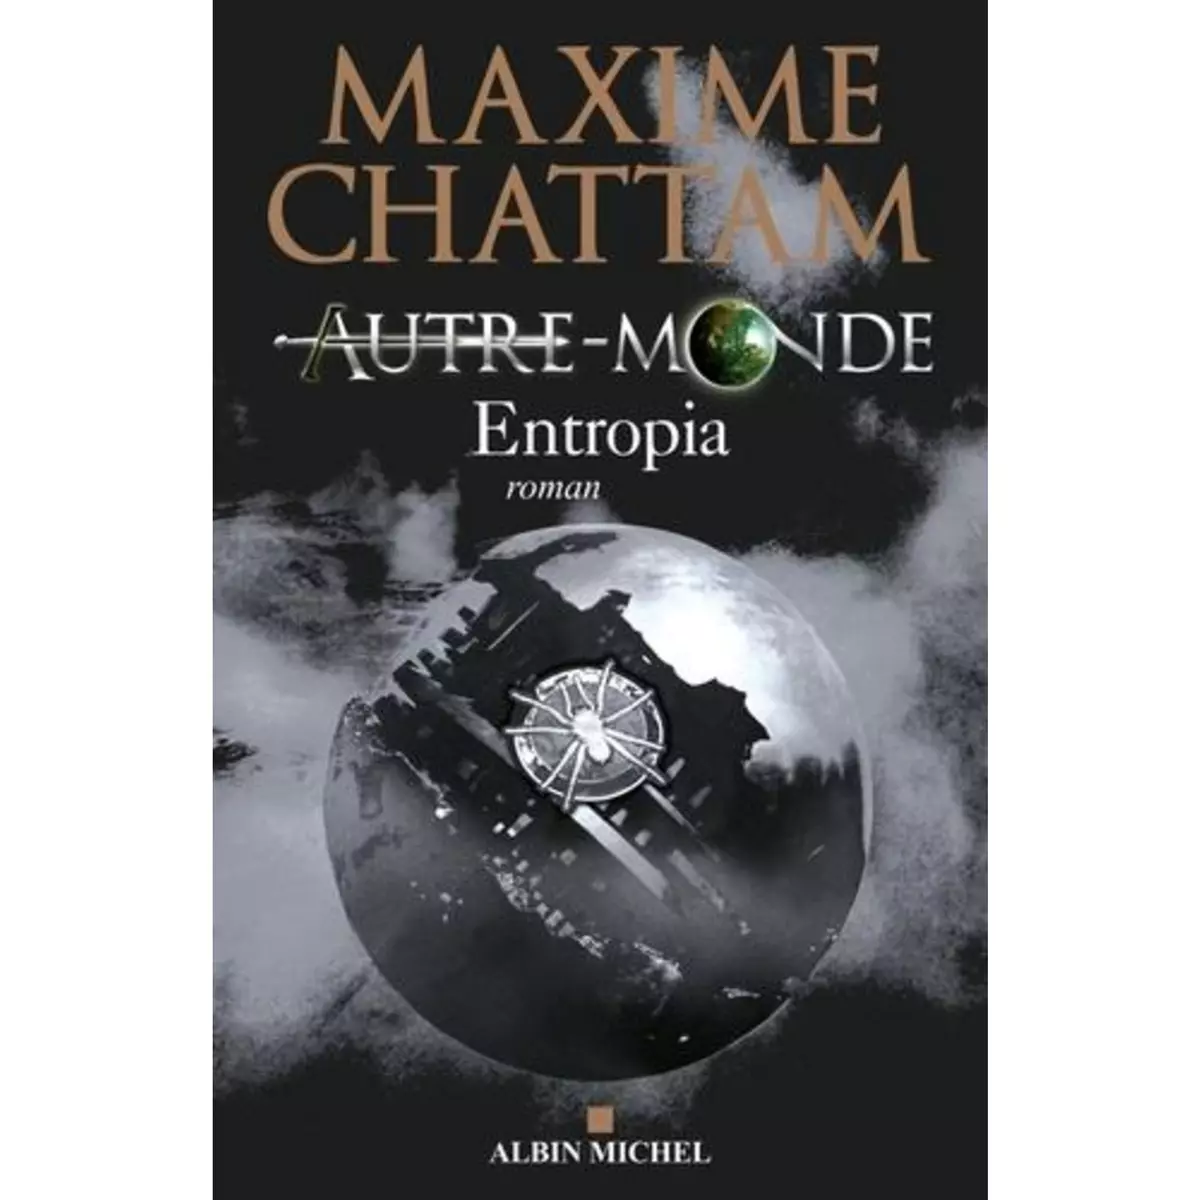  AUTRE-MONDE TOME 4 : ENTROPIA, Chattam Maxime